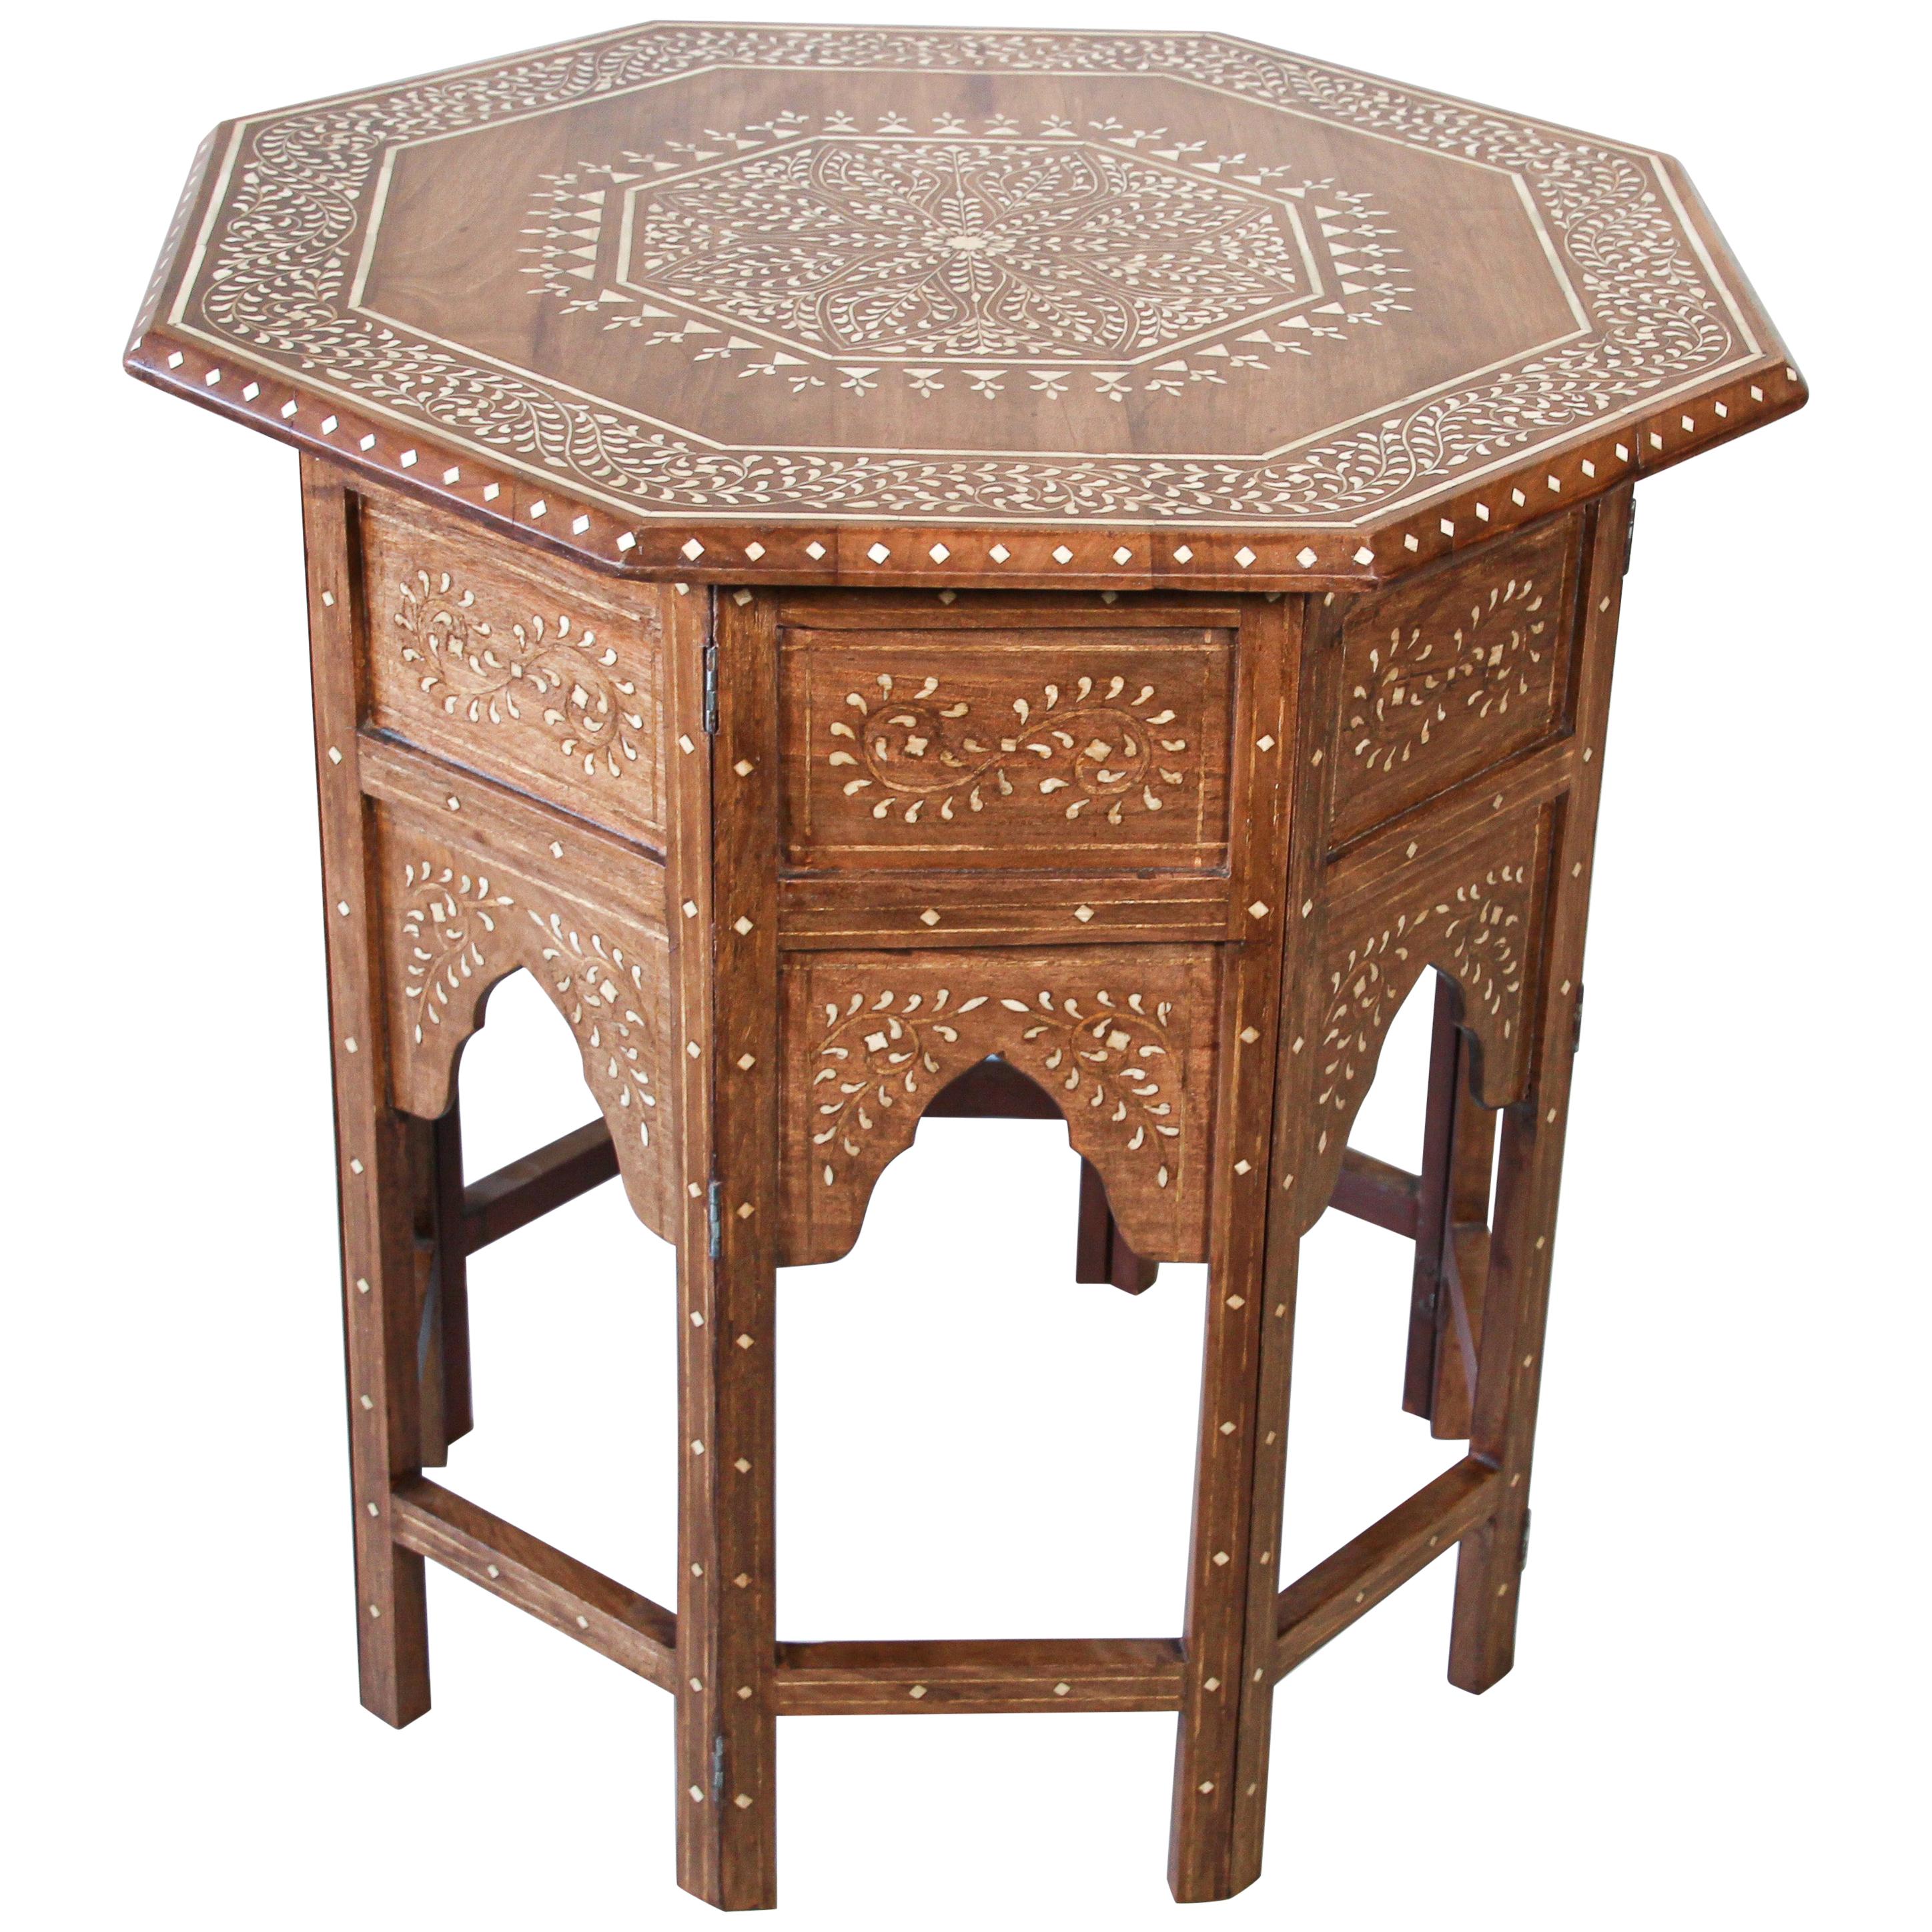 Anglo-Indian Mughal Octagonal Moorish Table with Inlay